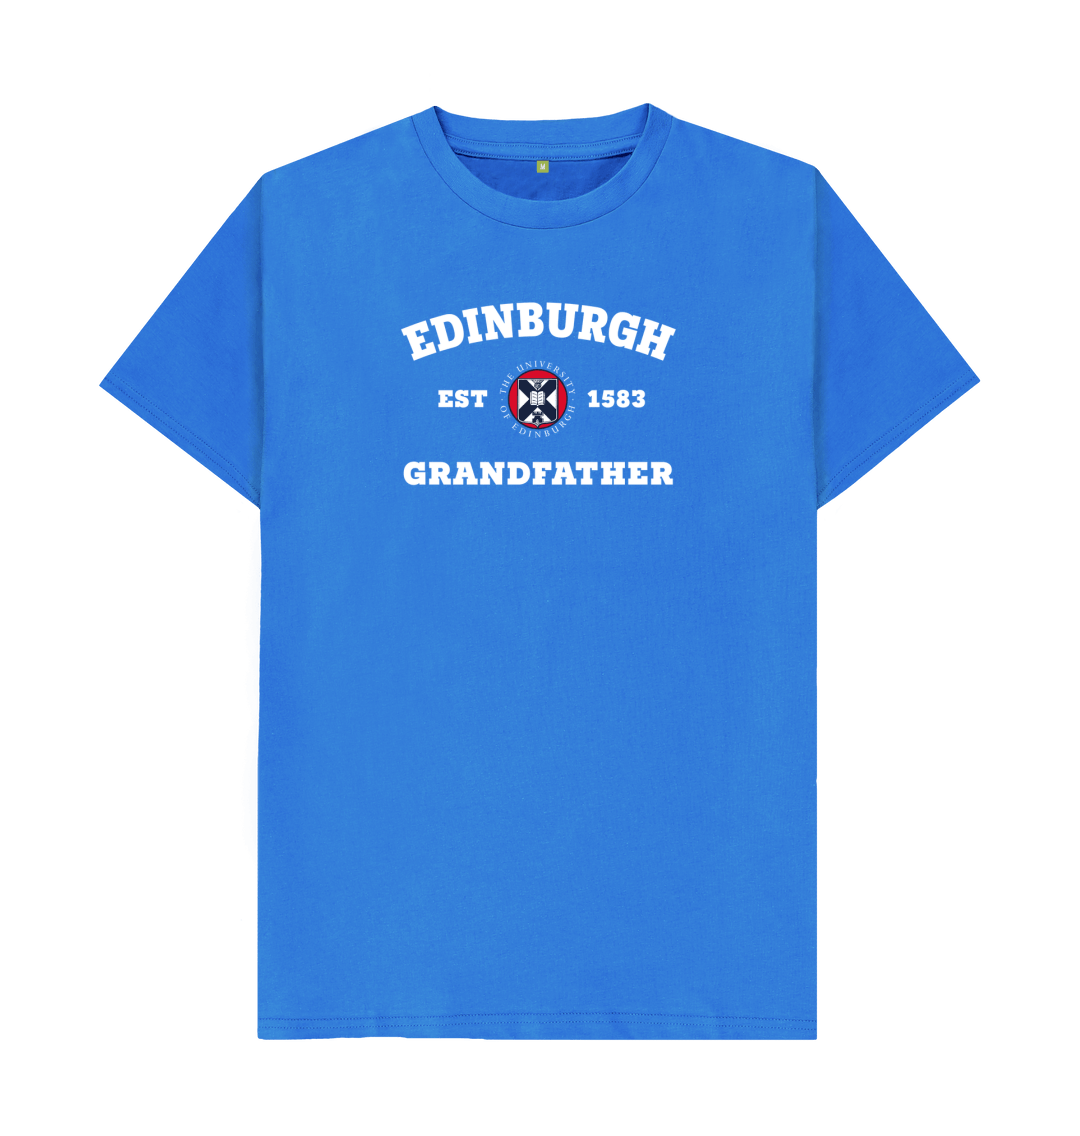 Edinburgh Grandfather T-shirt